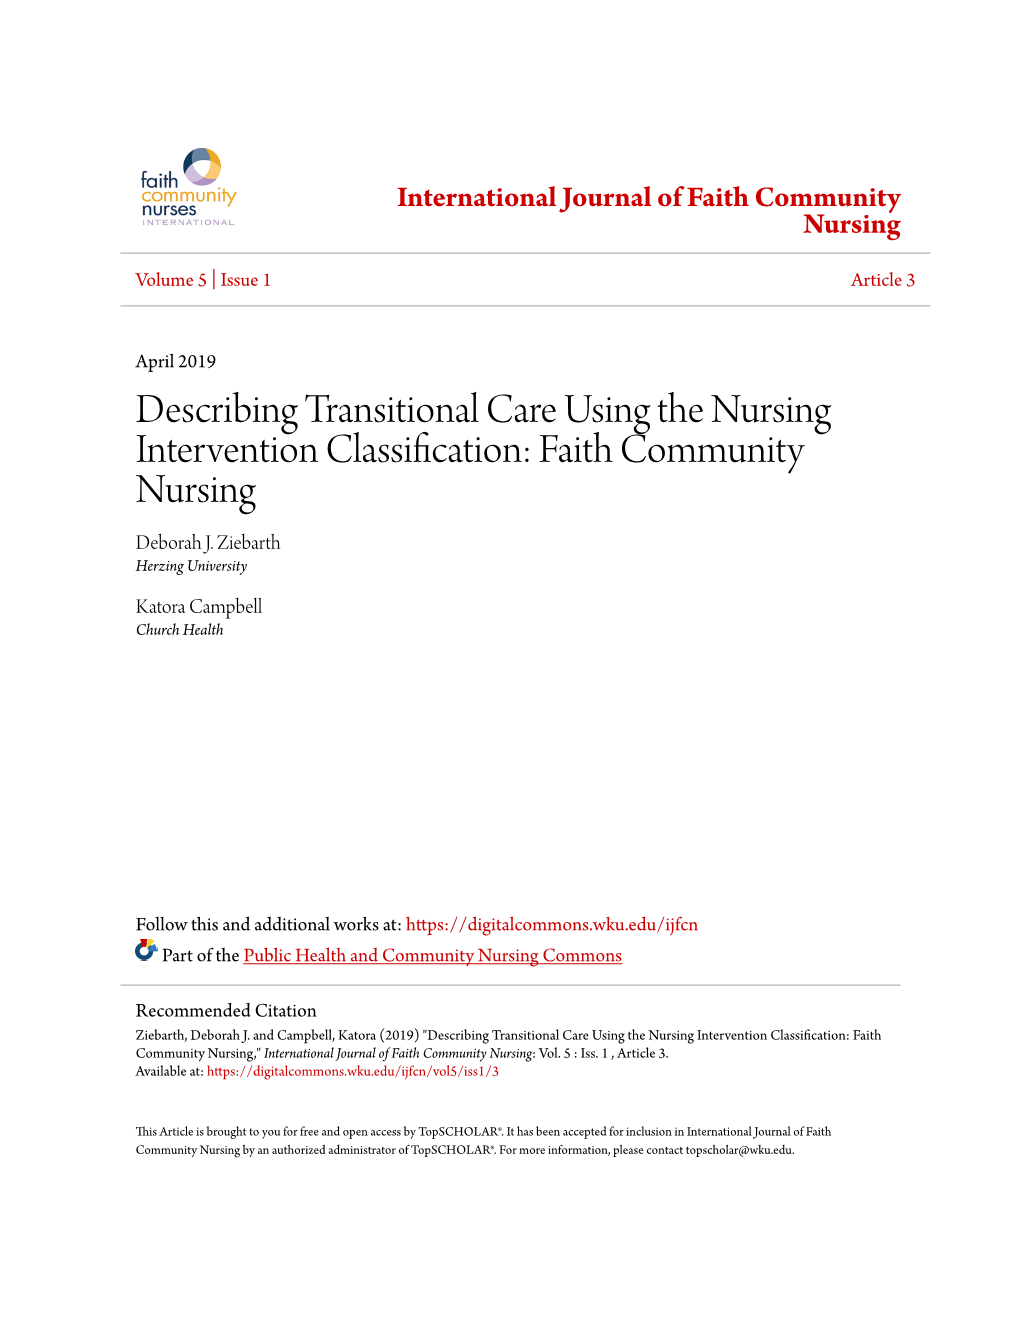 Describing Transitional Care Using the Nursing Intervention Classification: Faith Community Nursing Deborah J